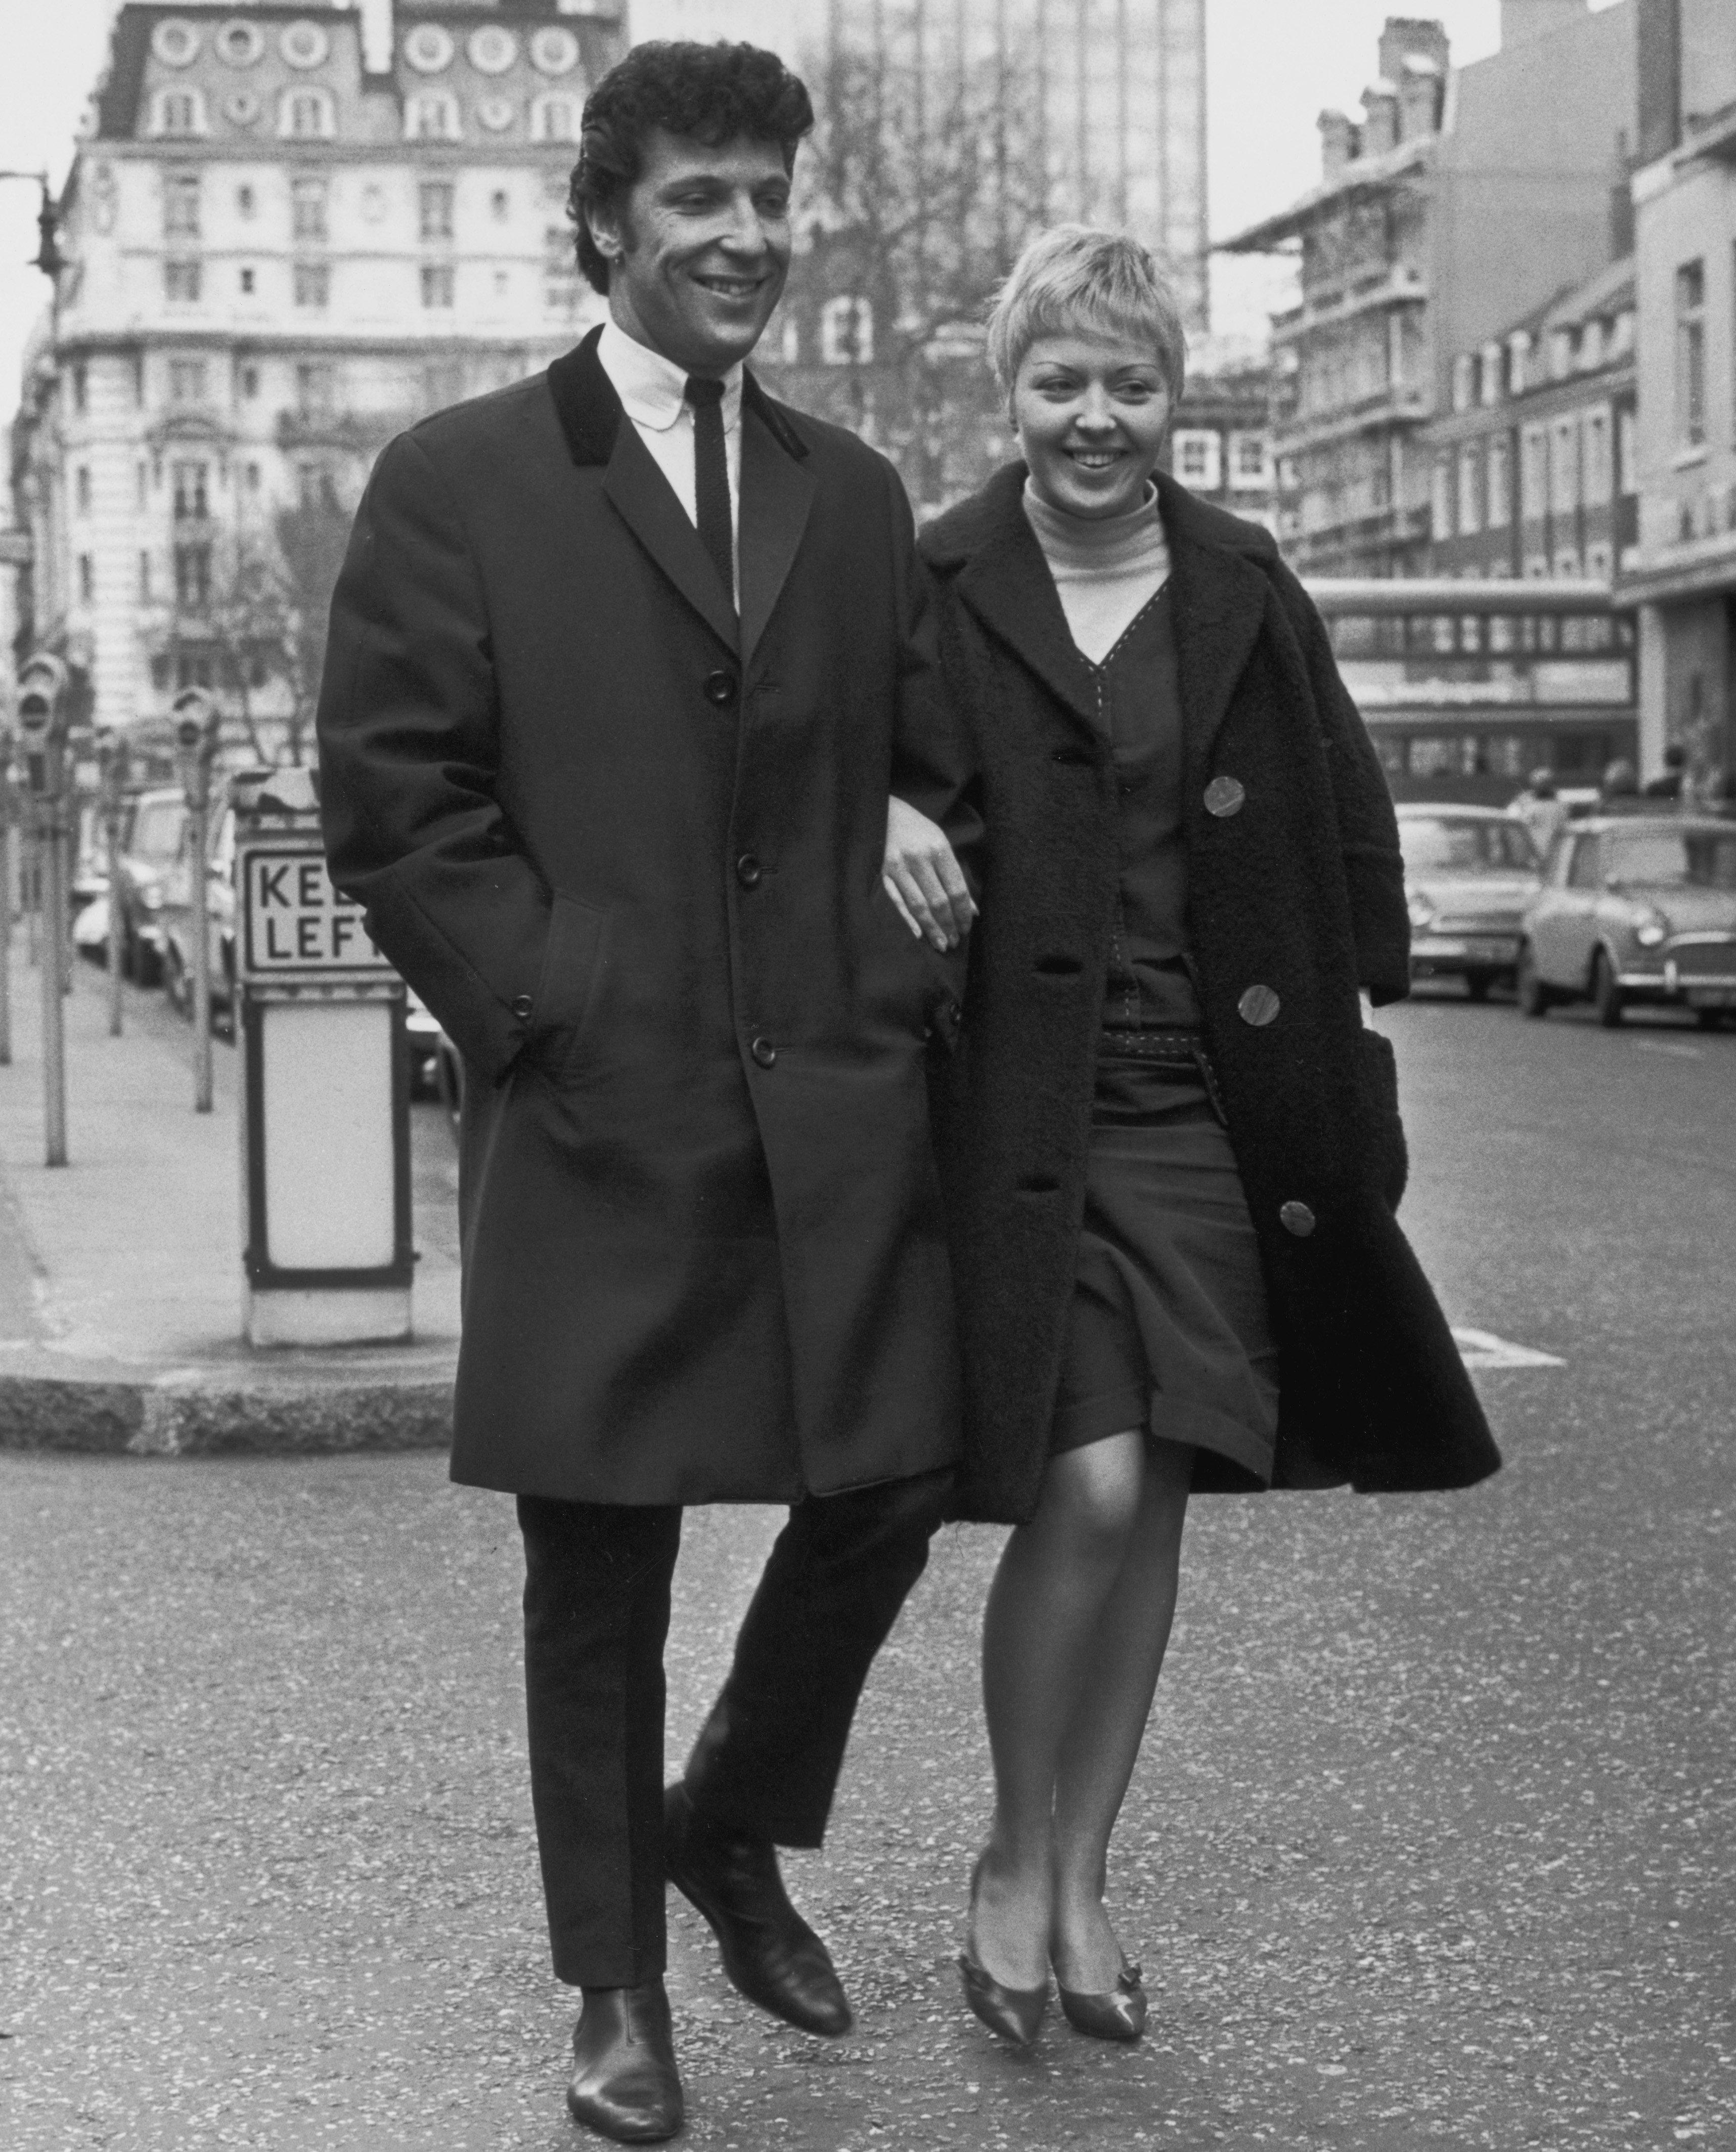 Tom Jones and Linda walking down a street circa 1965. | Source: Getty Images